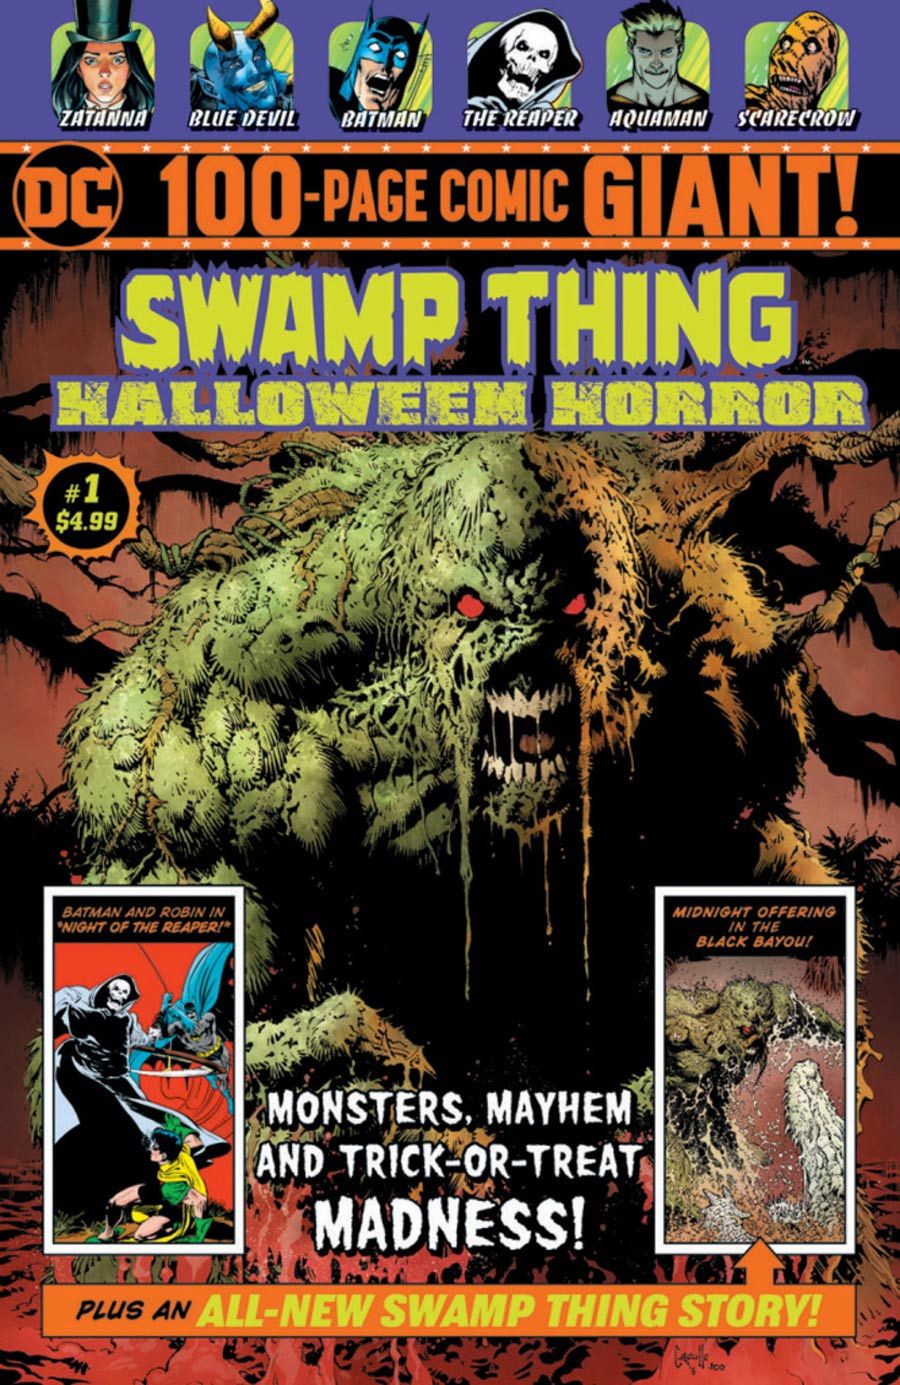 Swamp Thing Halloween Horror Comic